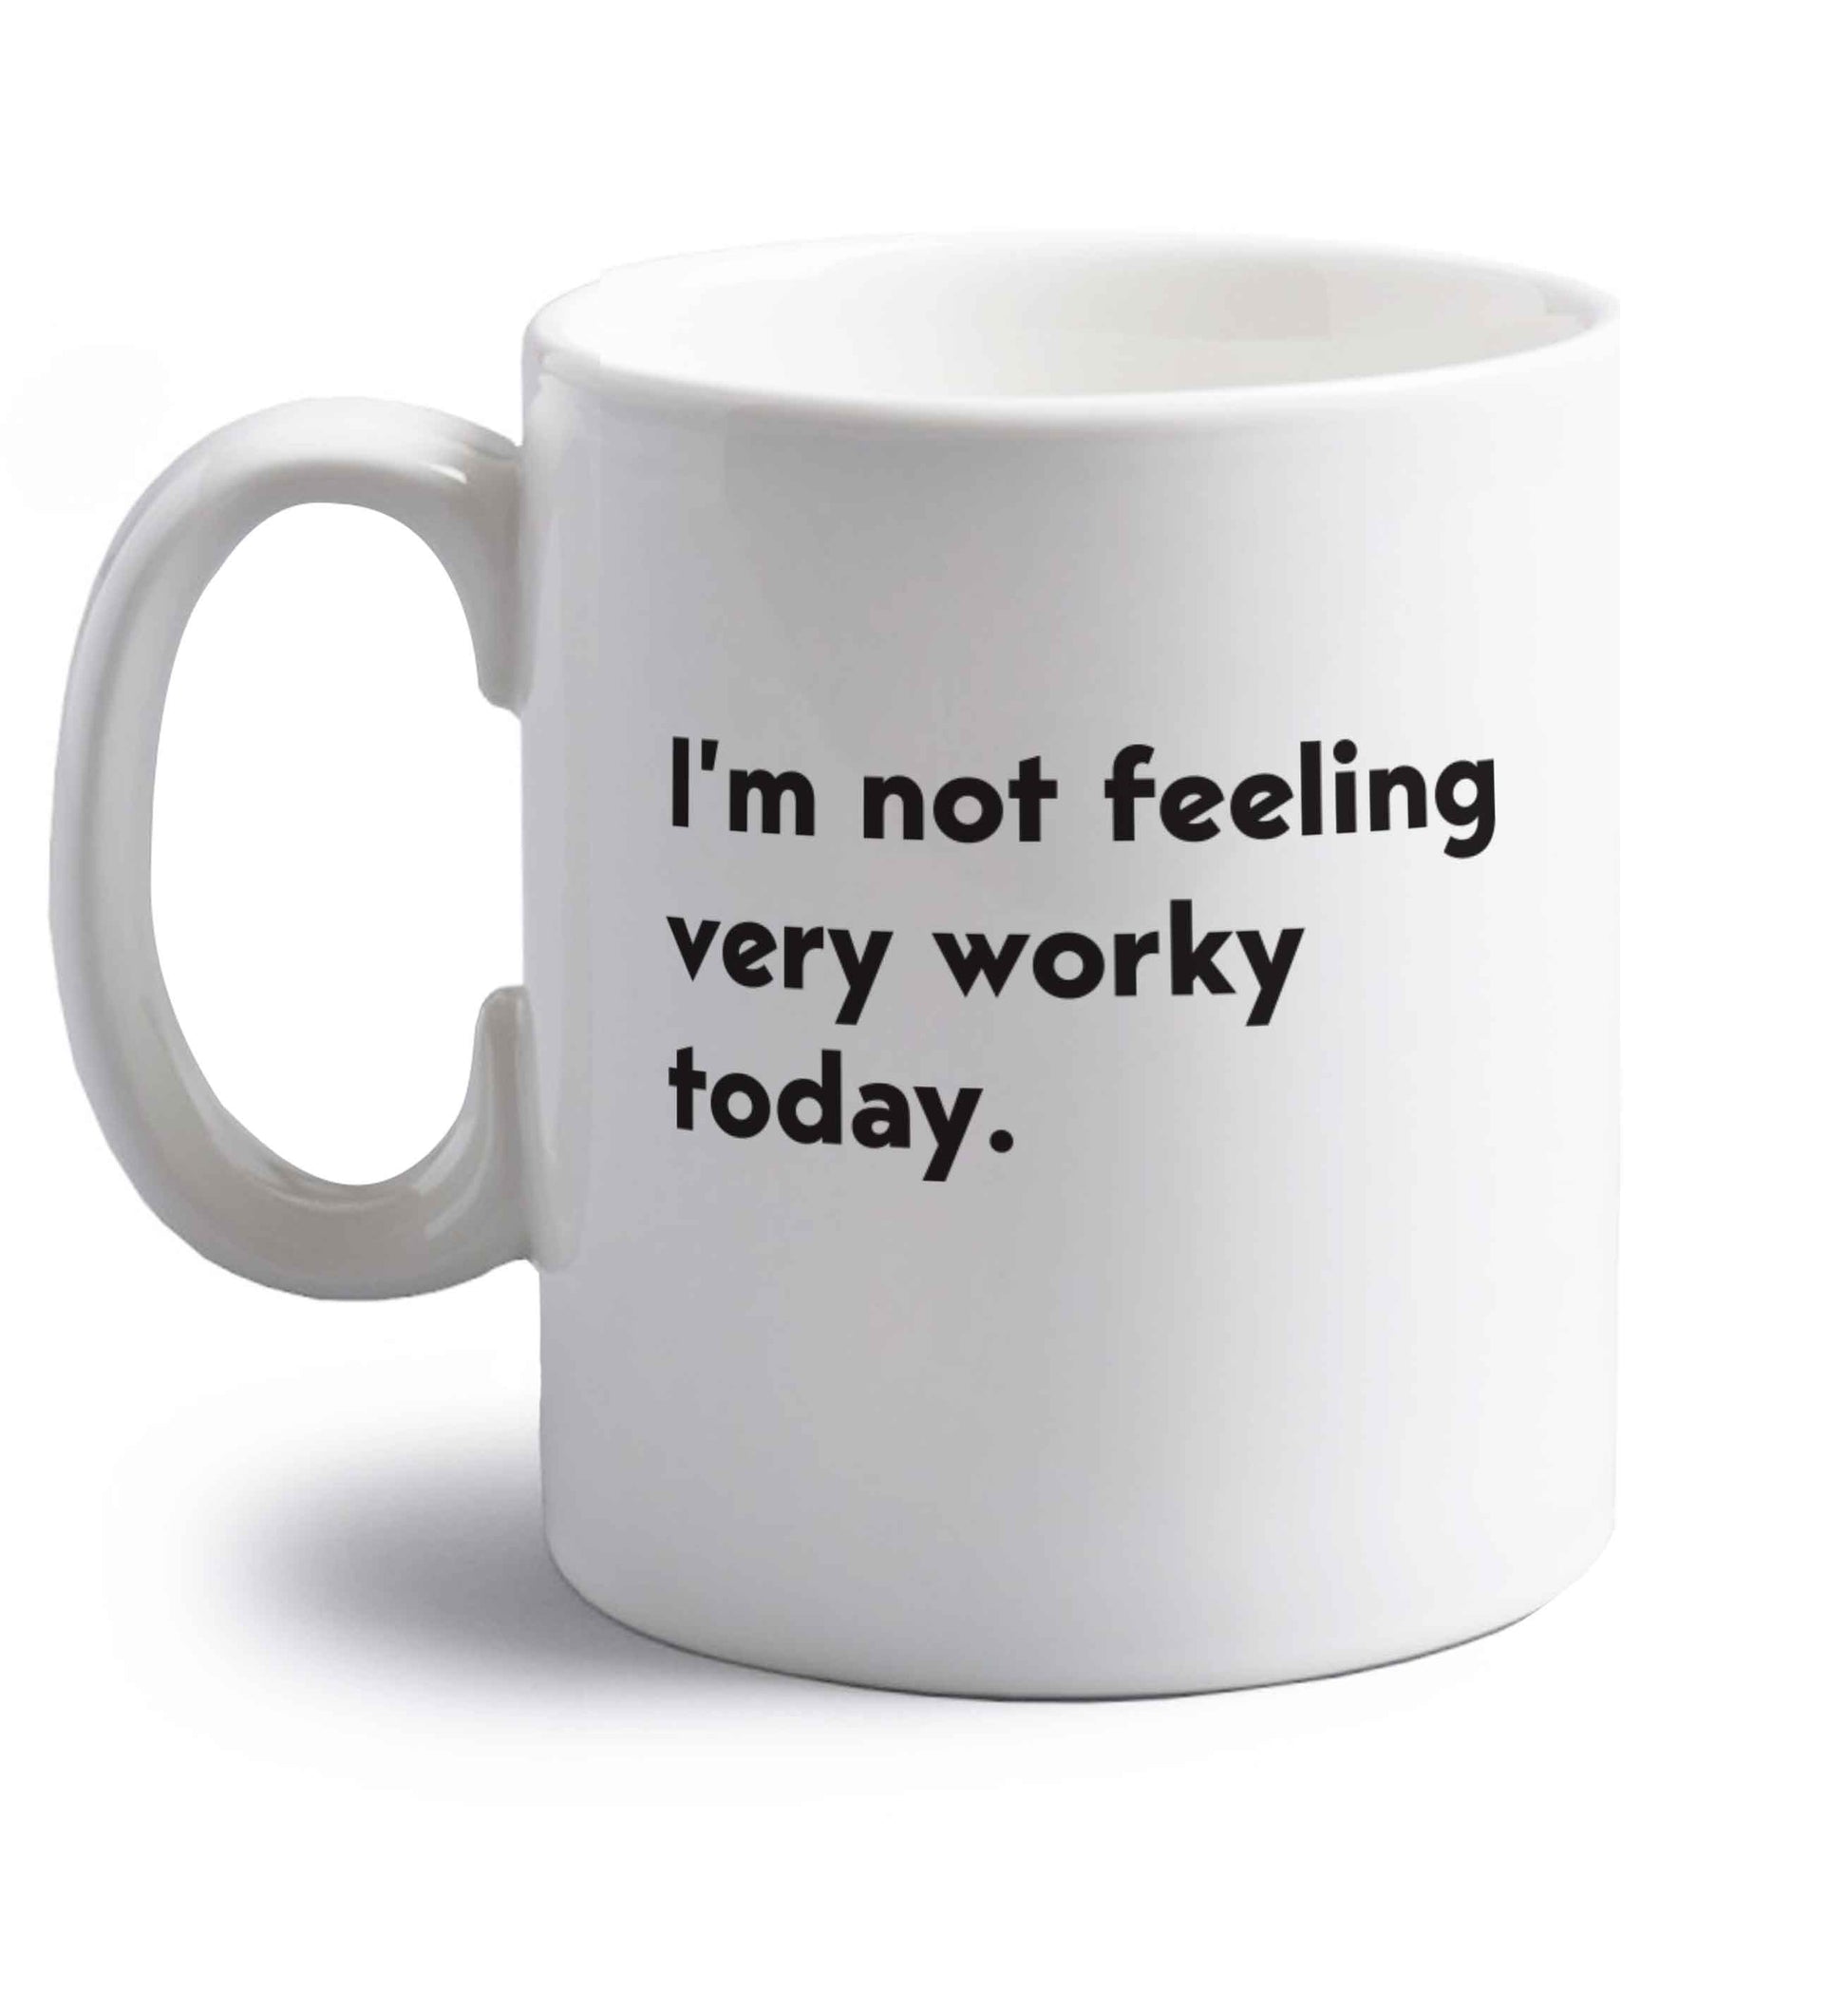 I'm not feeling very worky today right handed white ceramic mug 